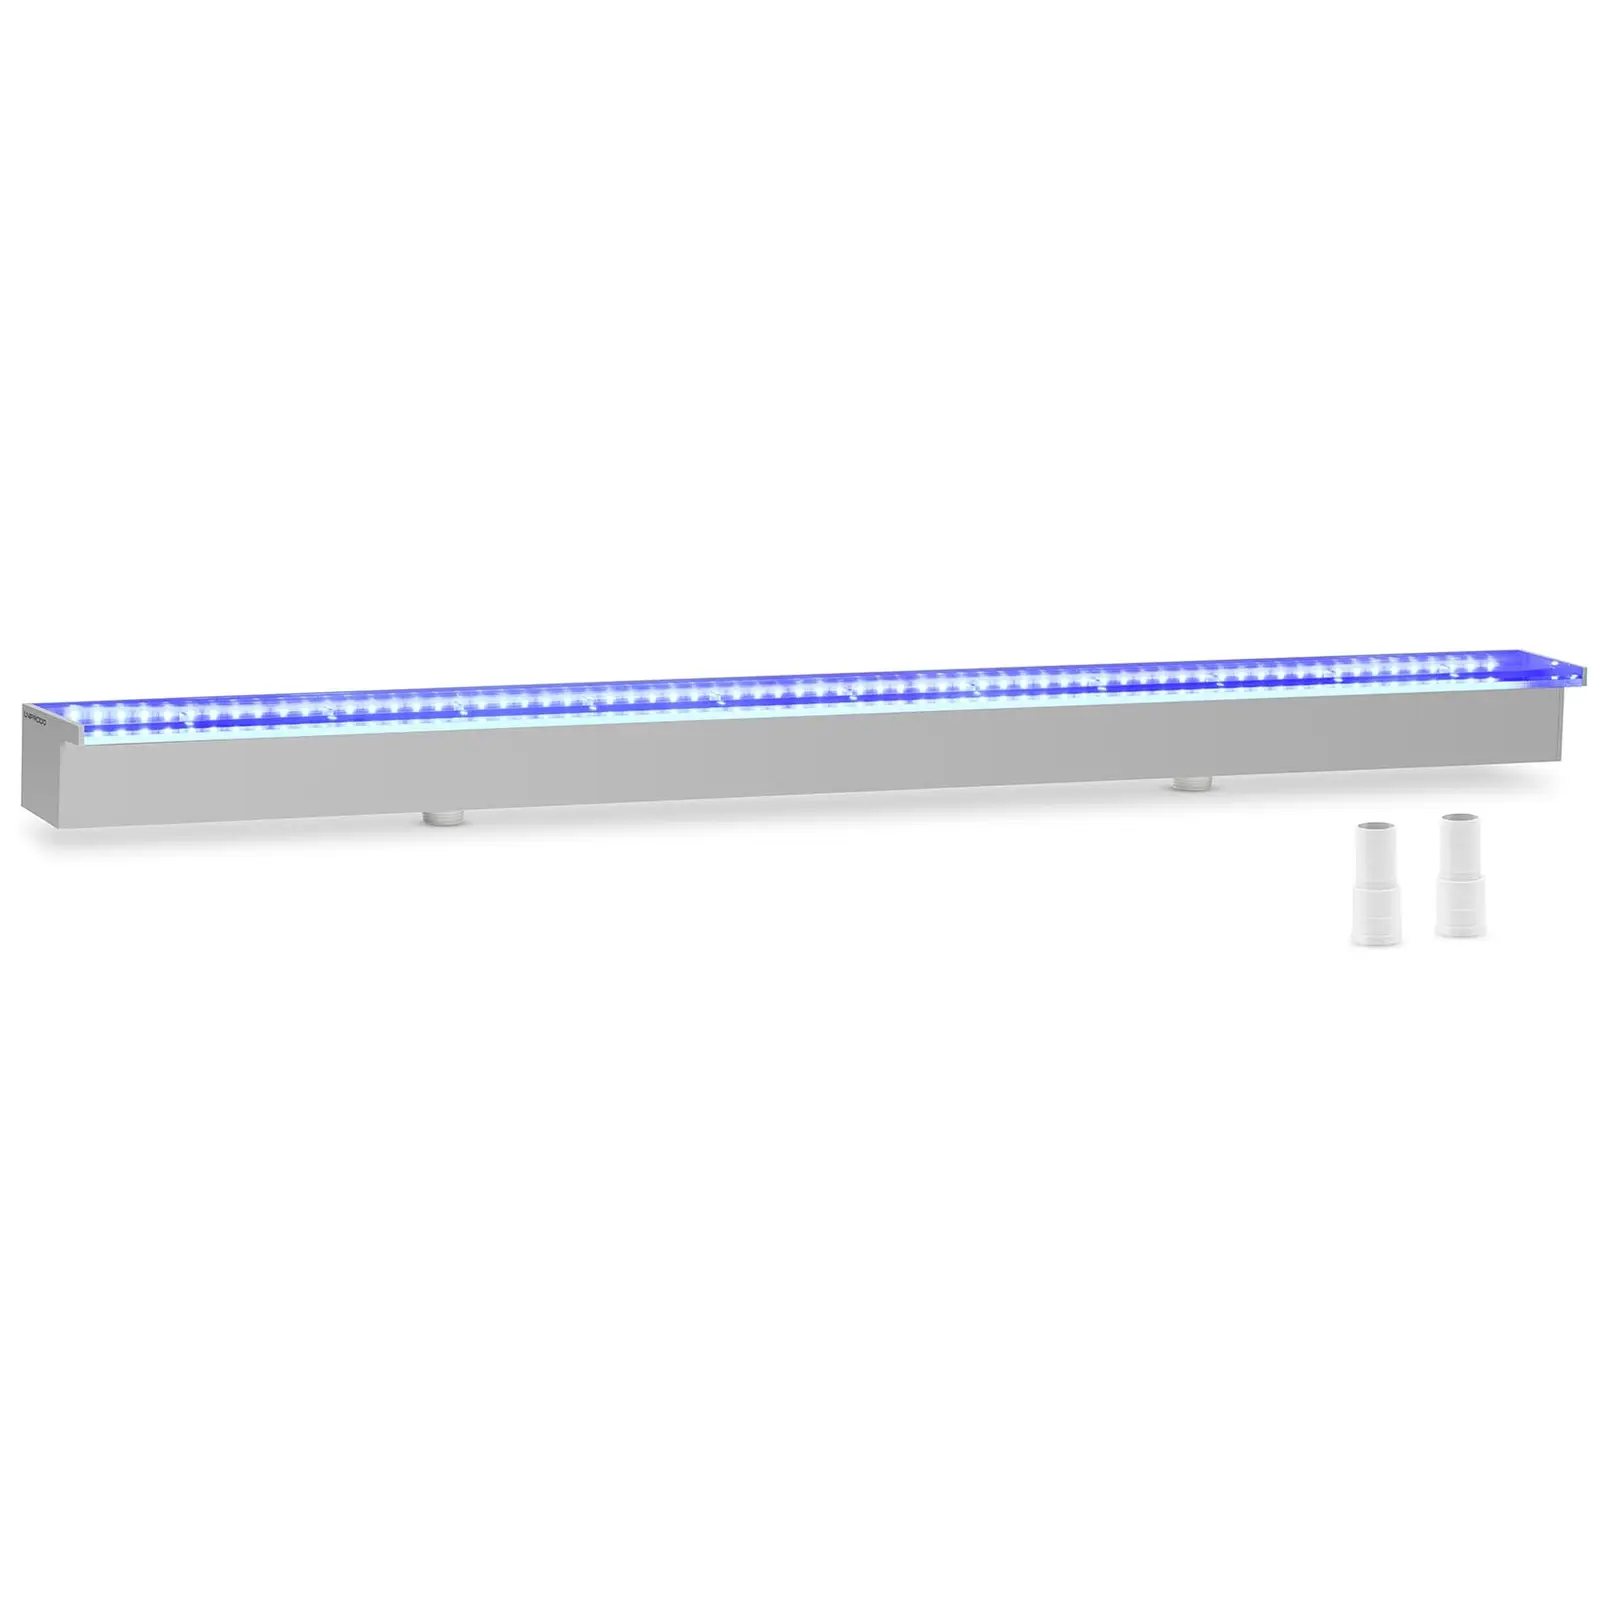 Chrlič vody - 120 cm - LED osvětlení - modrá/bílá barva